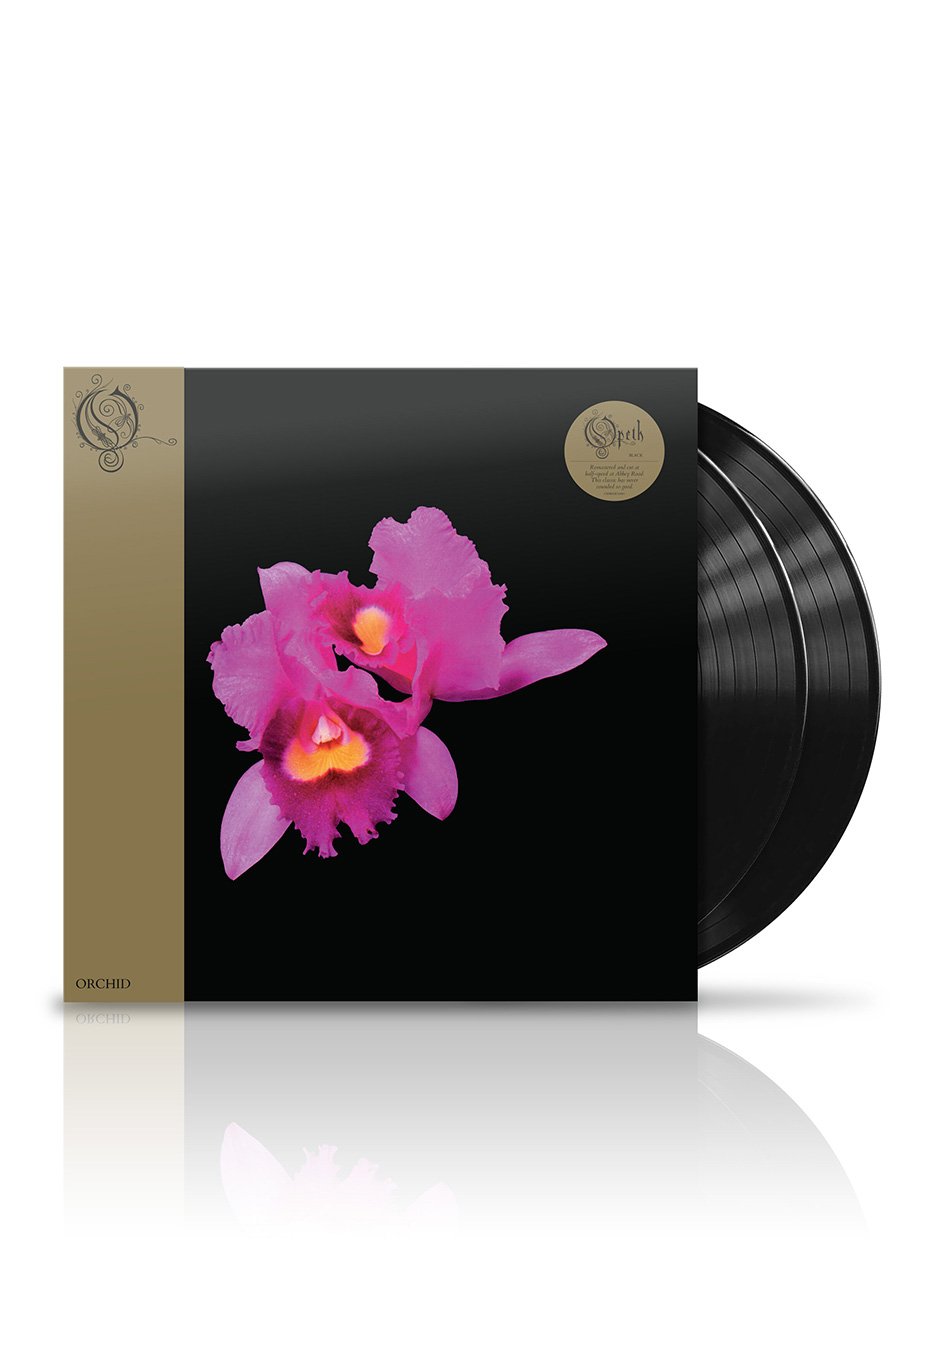 Opeth - Orchid Ltd. - 2 Vinyl